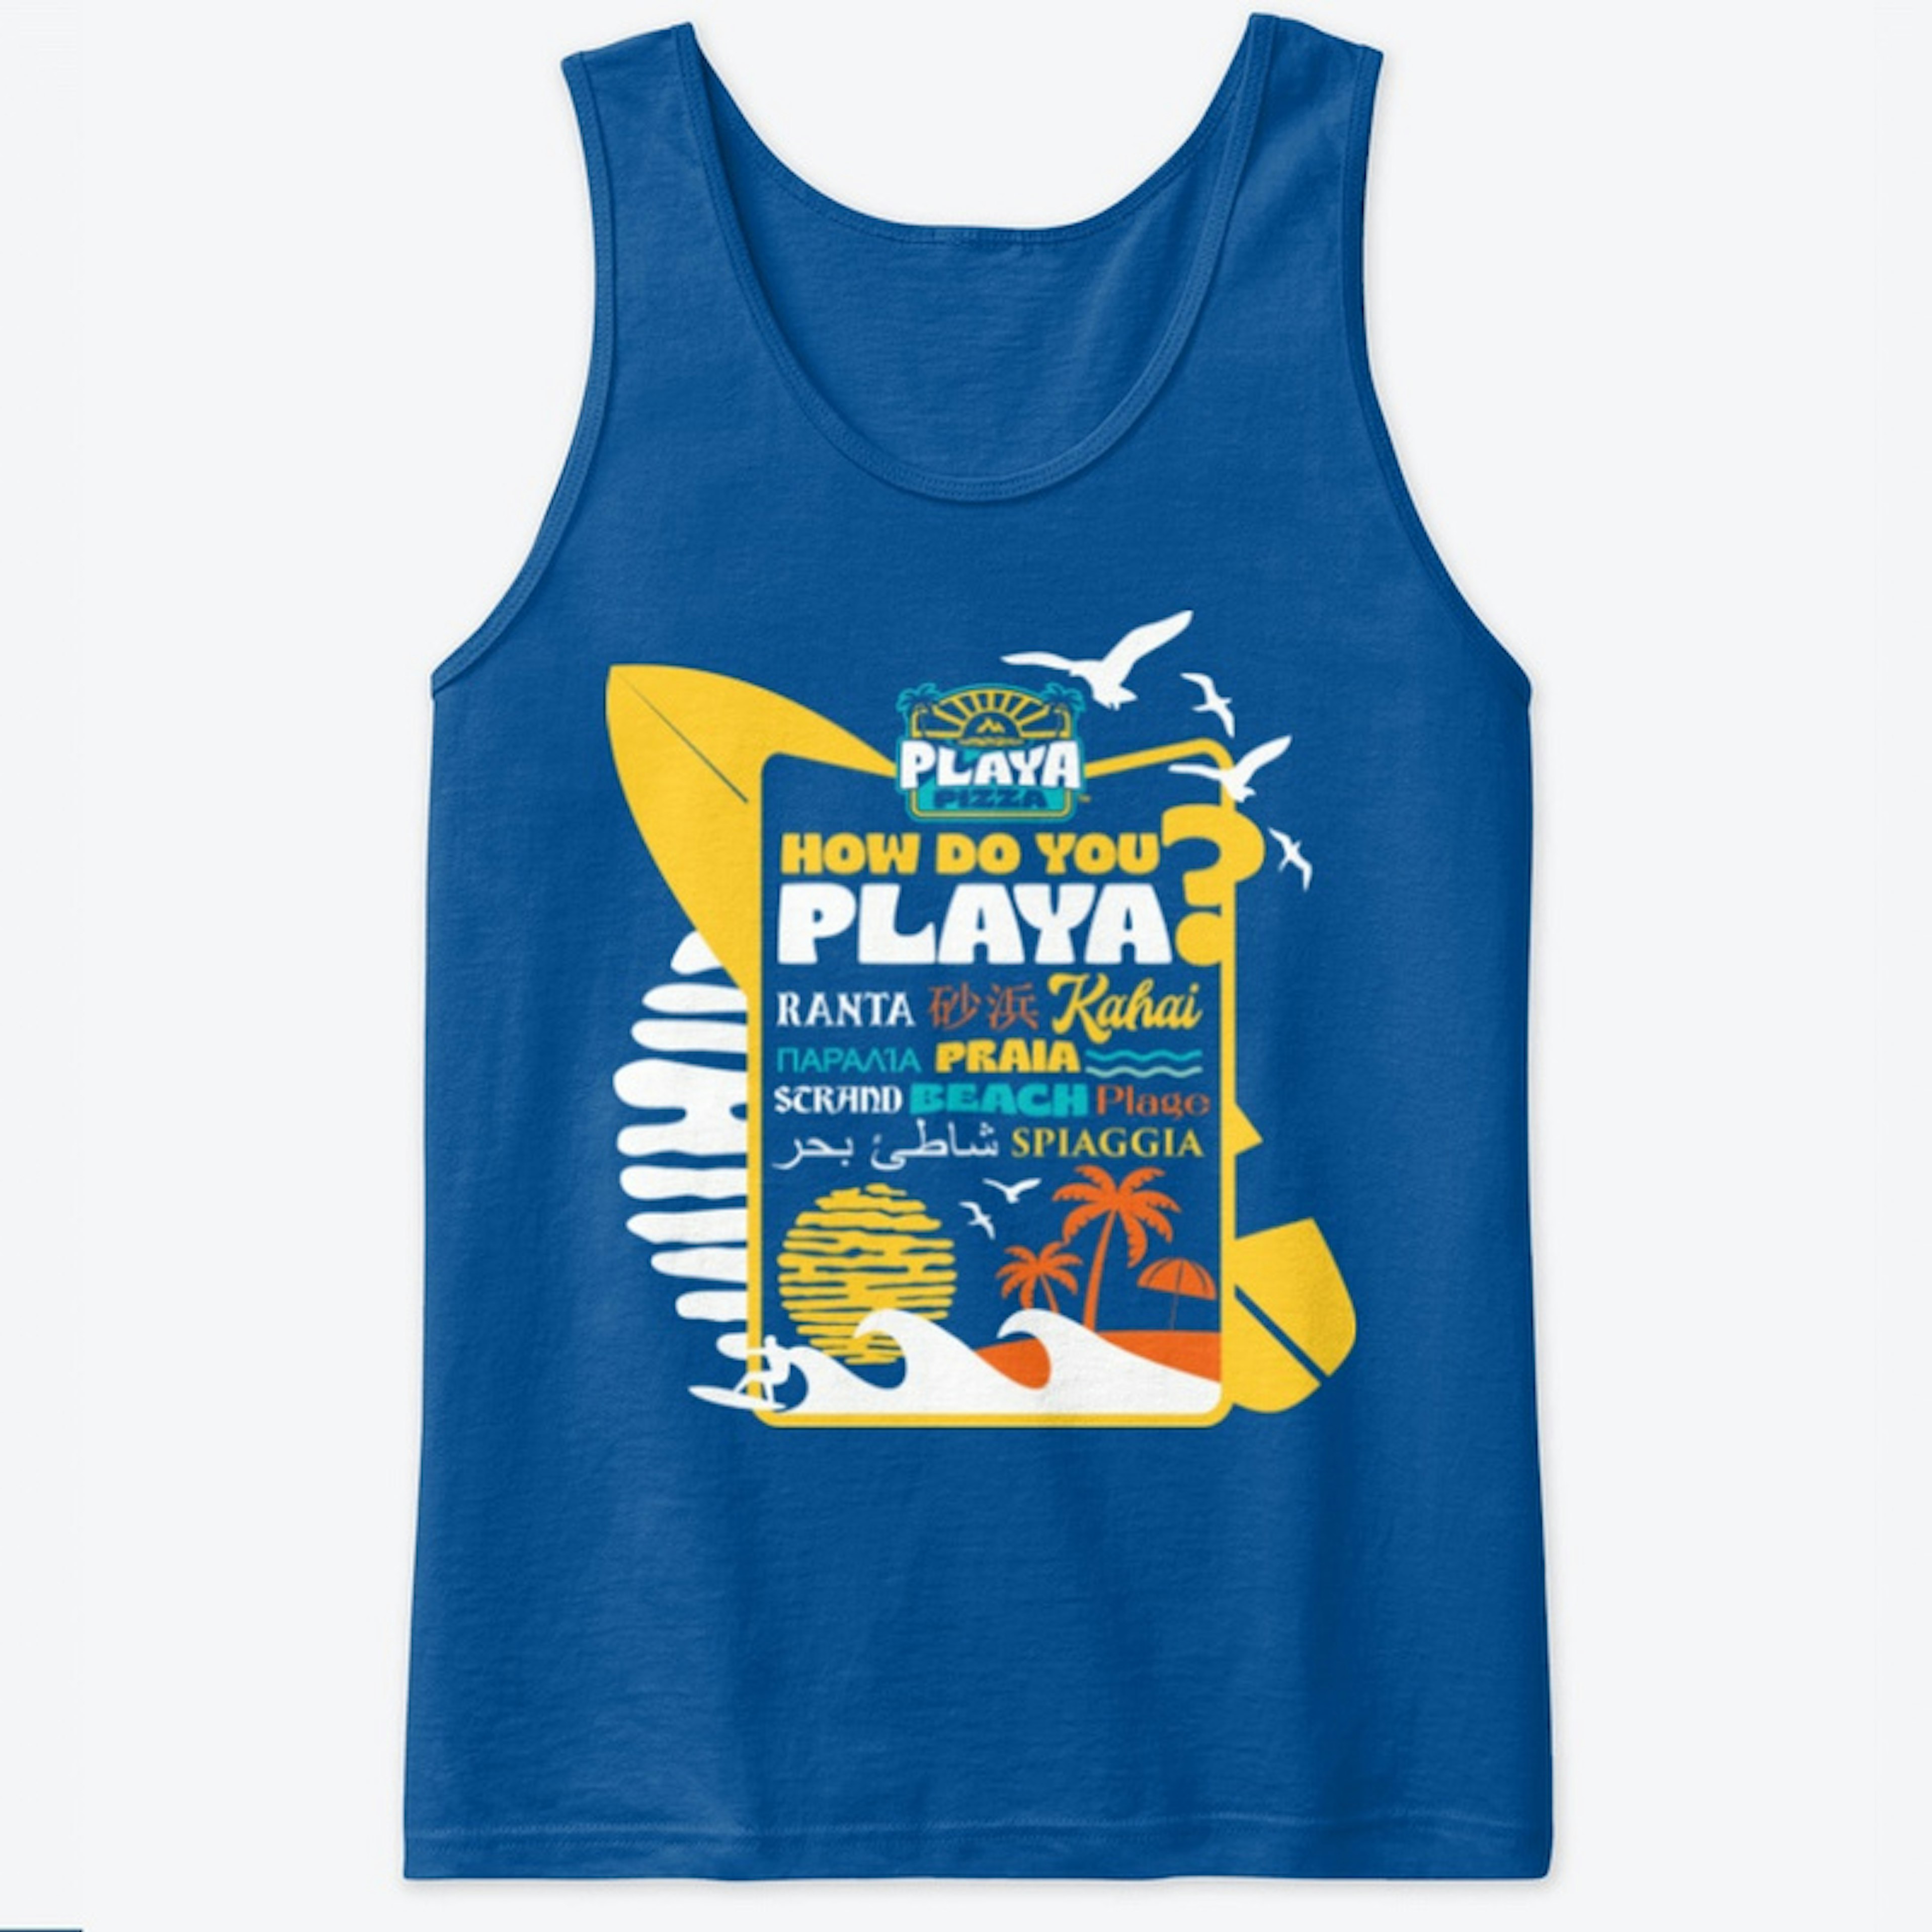 How do You Playa?